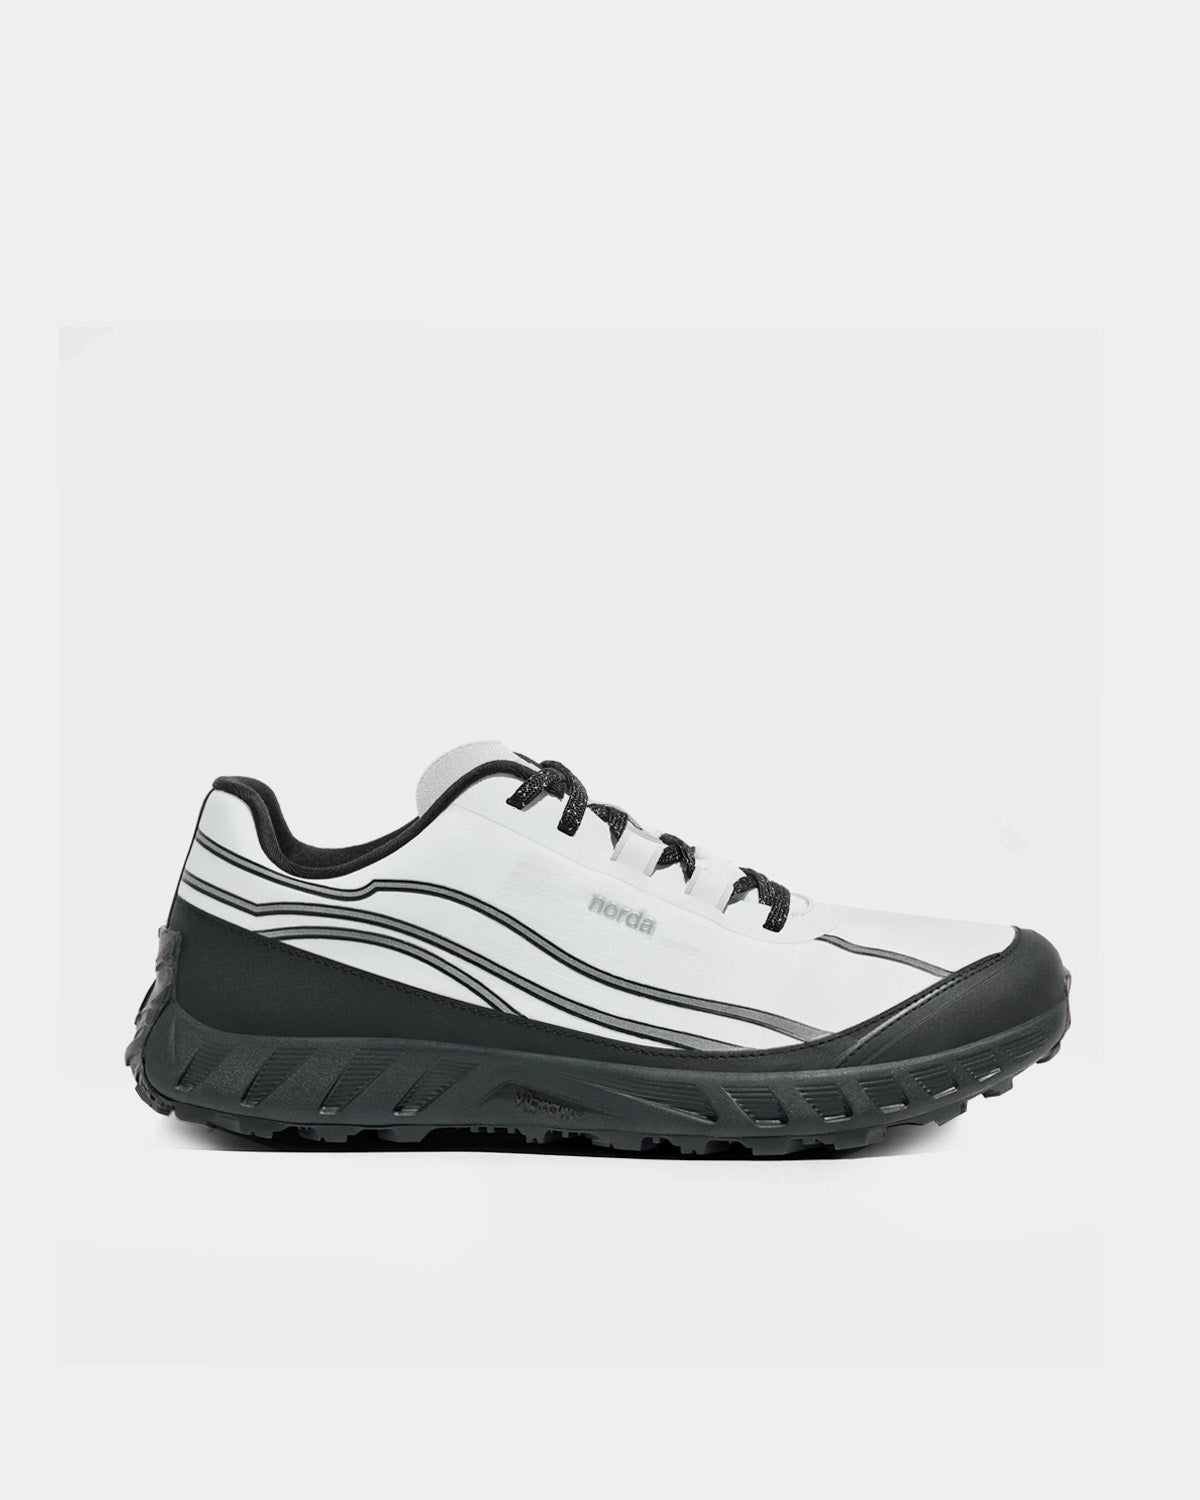 Norda - 002 Alpine White Running Shoes